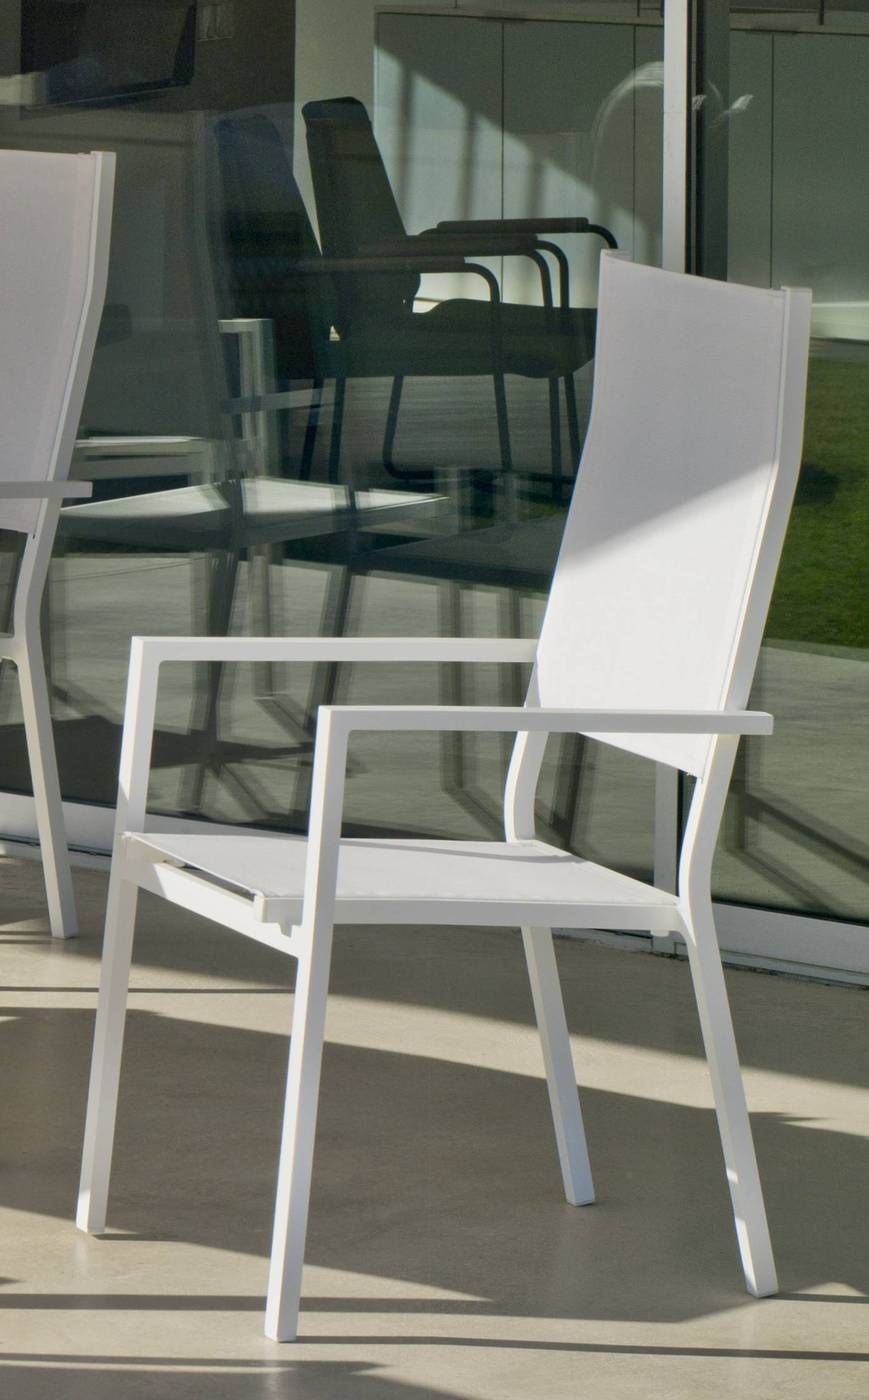 Set Aluminio Córcega-Janeiro 210-8 - Conjunto aluminio para jardín: Mesa rectangular 210 cm + 8 sillones altos de textilen. Disponible en color blanco, plata y antracita.